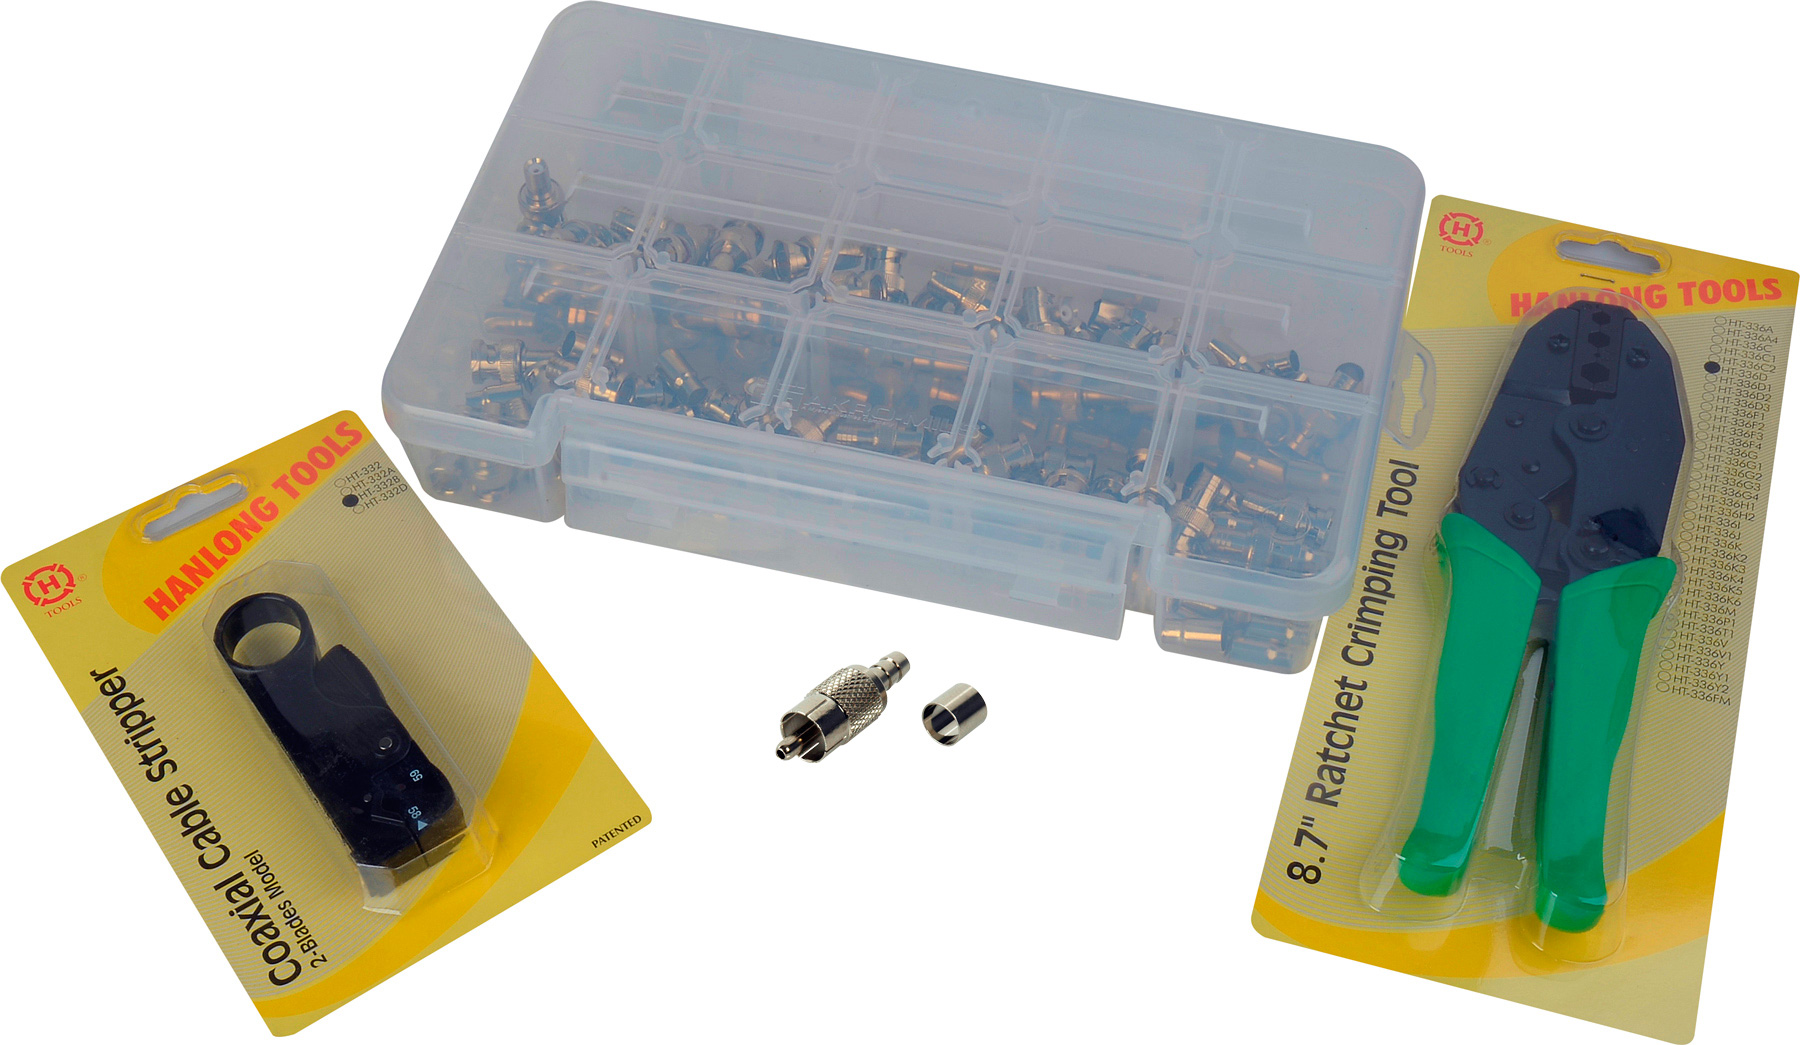 Adapter & Connector Kits